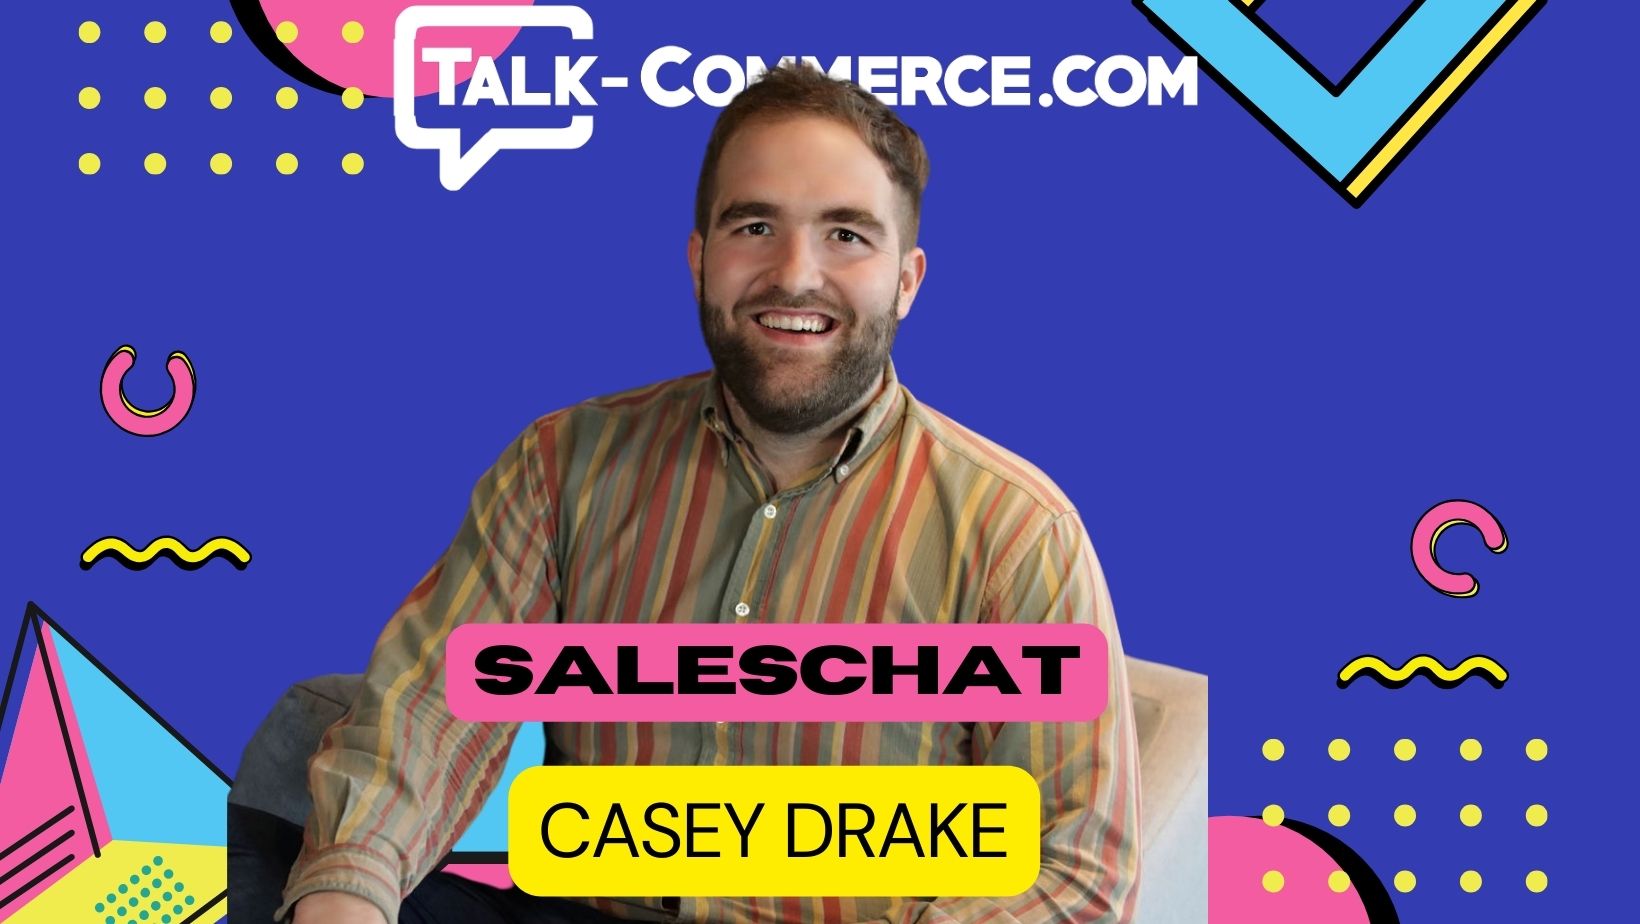 Talk Commerce - Casey Drake Endear SalesChat